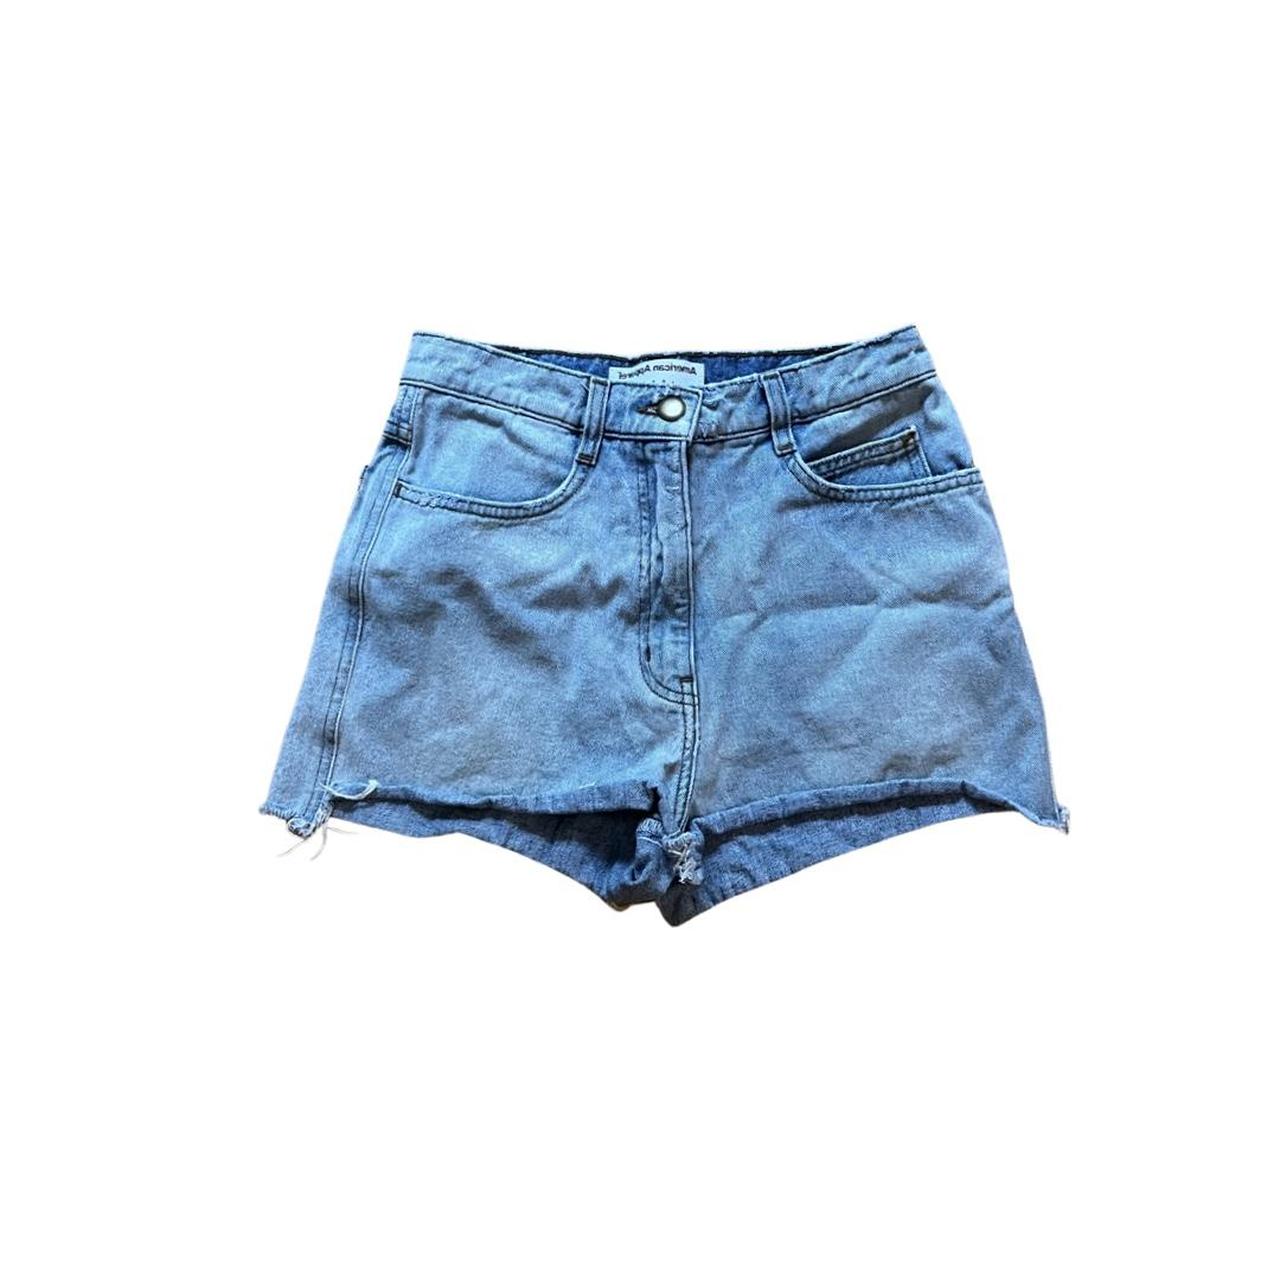 American Apparel Women's Blue Shorts